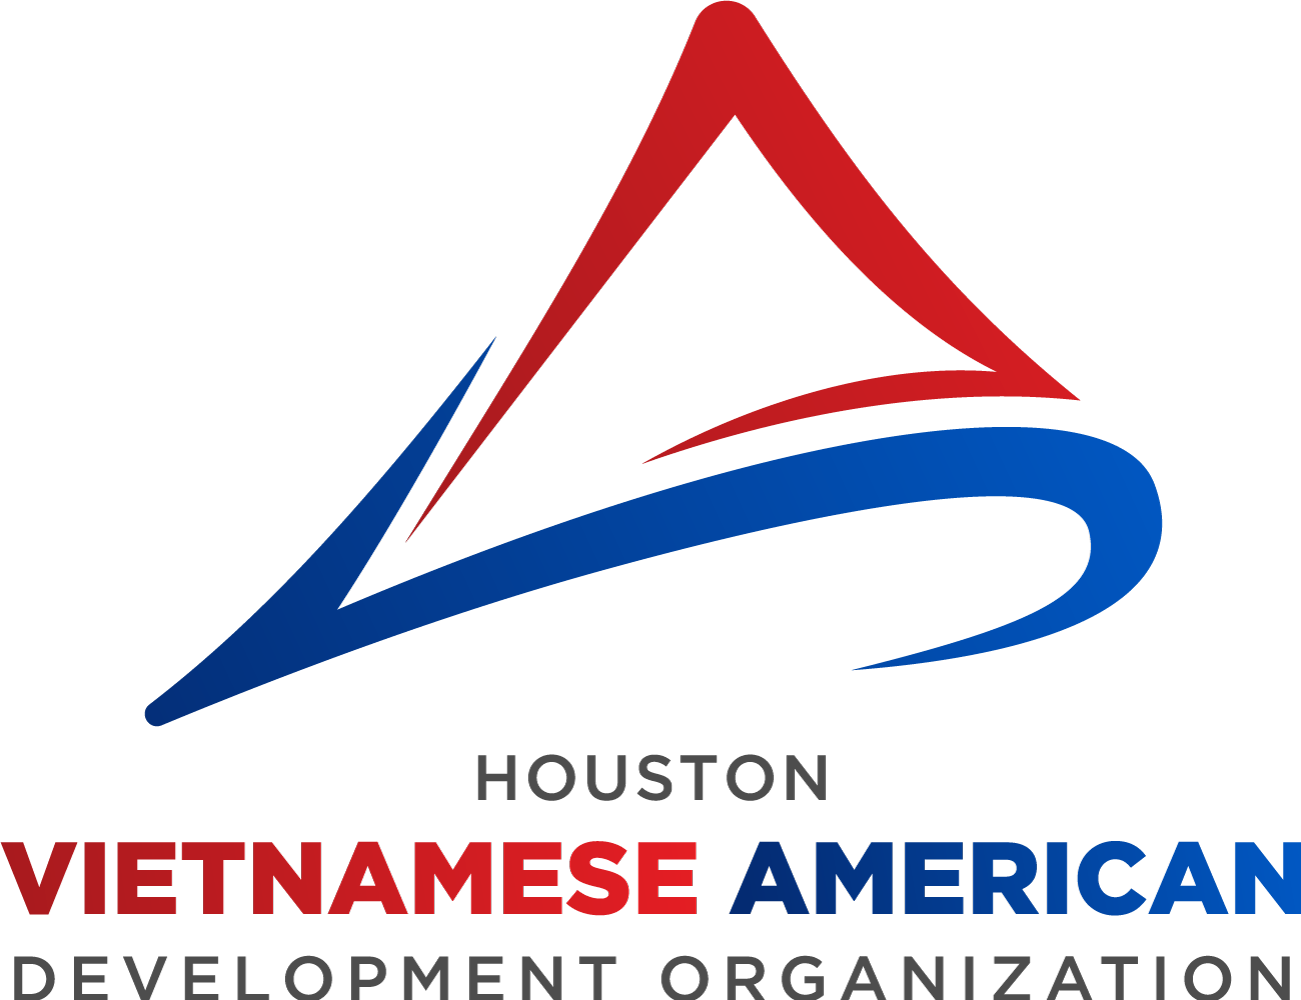 Houston Vietnamese American Development Organization